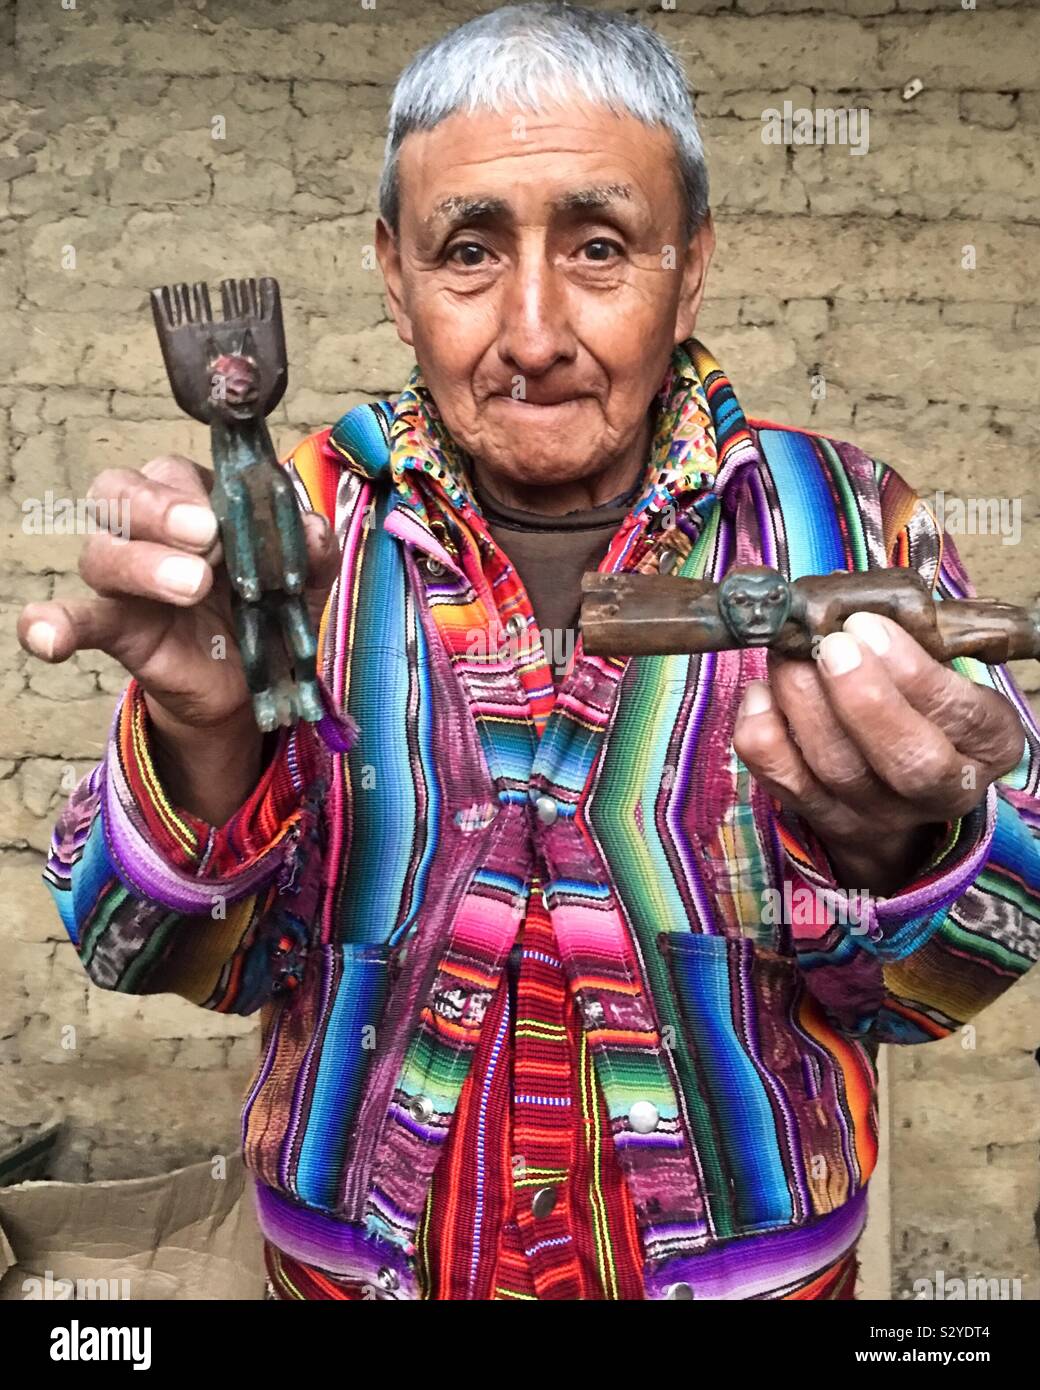 Guatemalan folk artist Antonio showing his hand carved slingshots Stock Photo